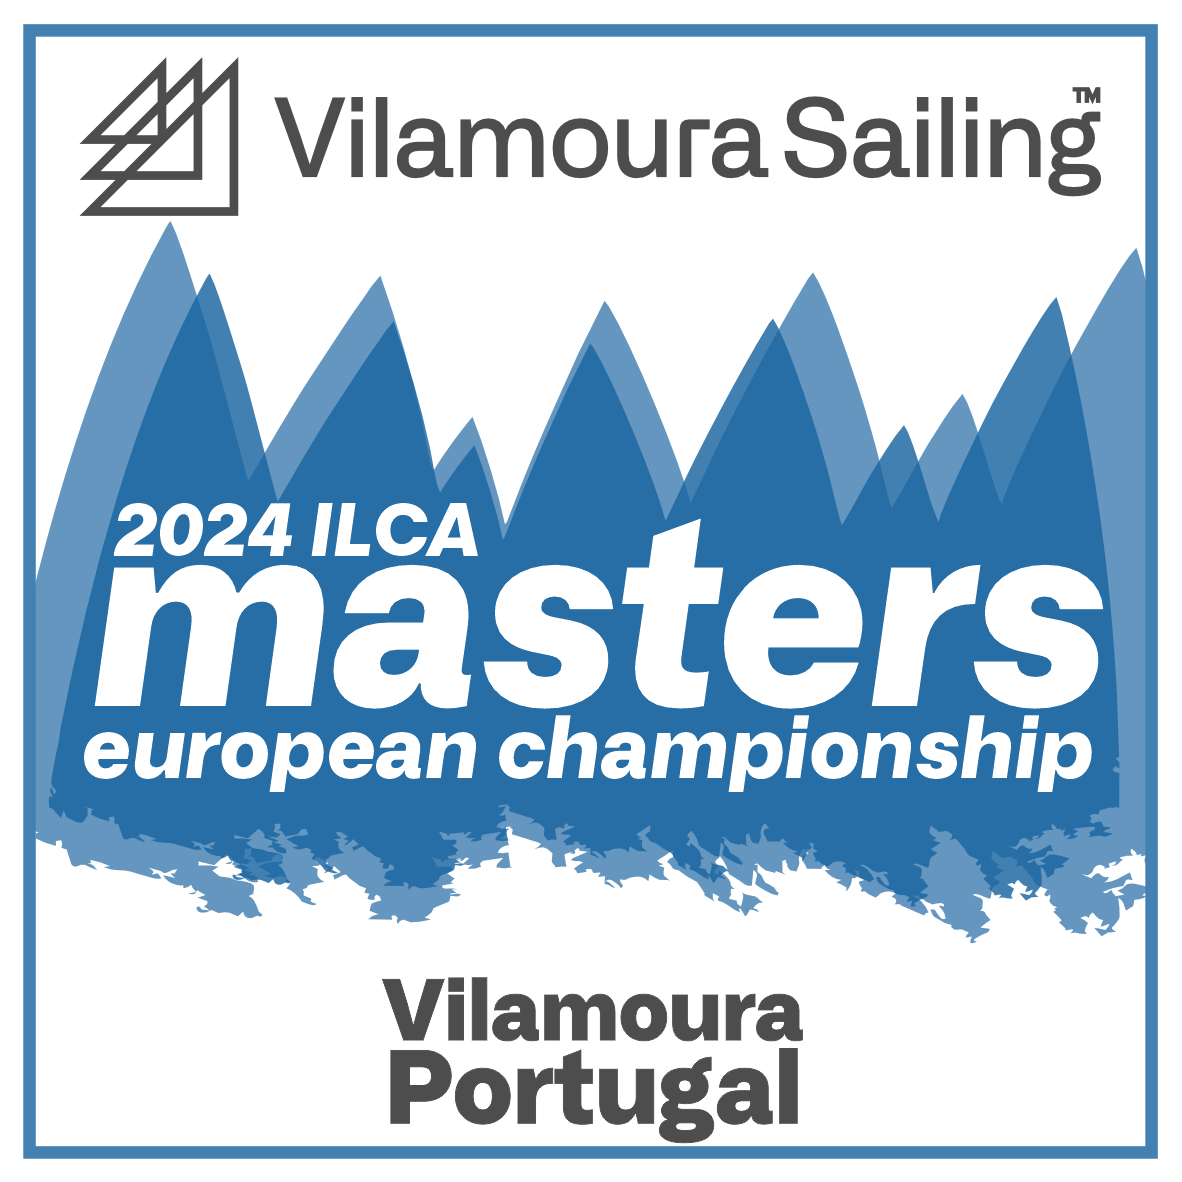 2024 ILCA Masters European Championship